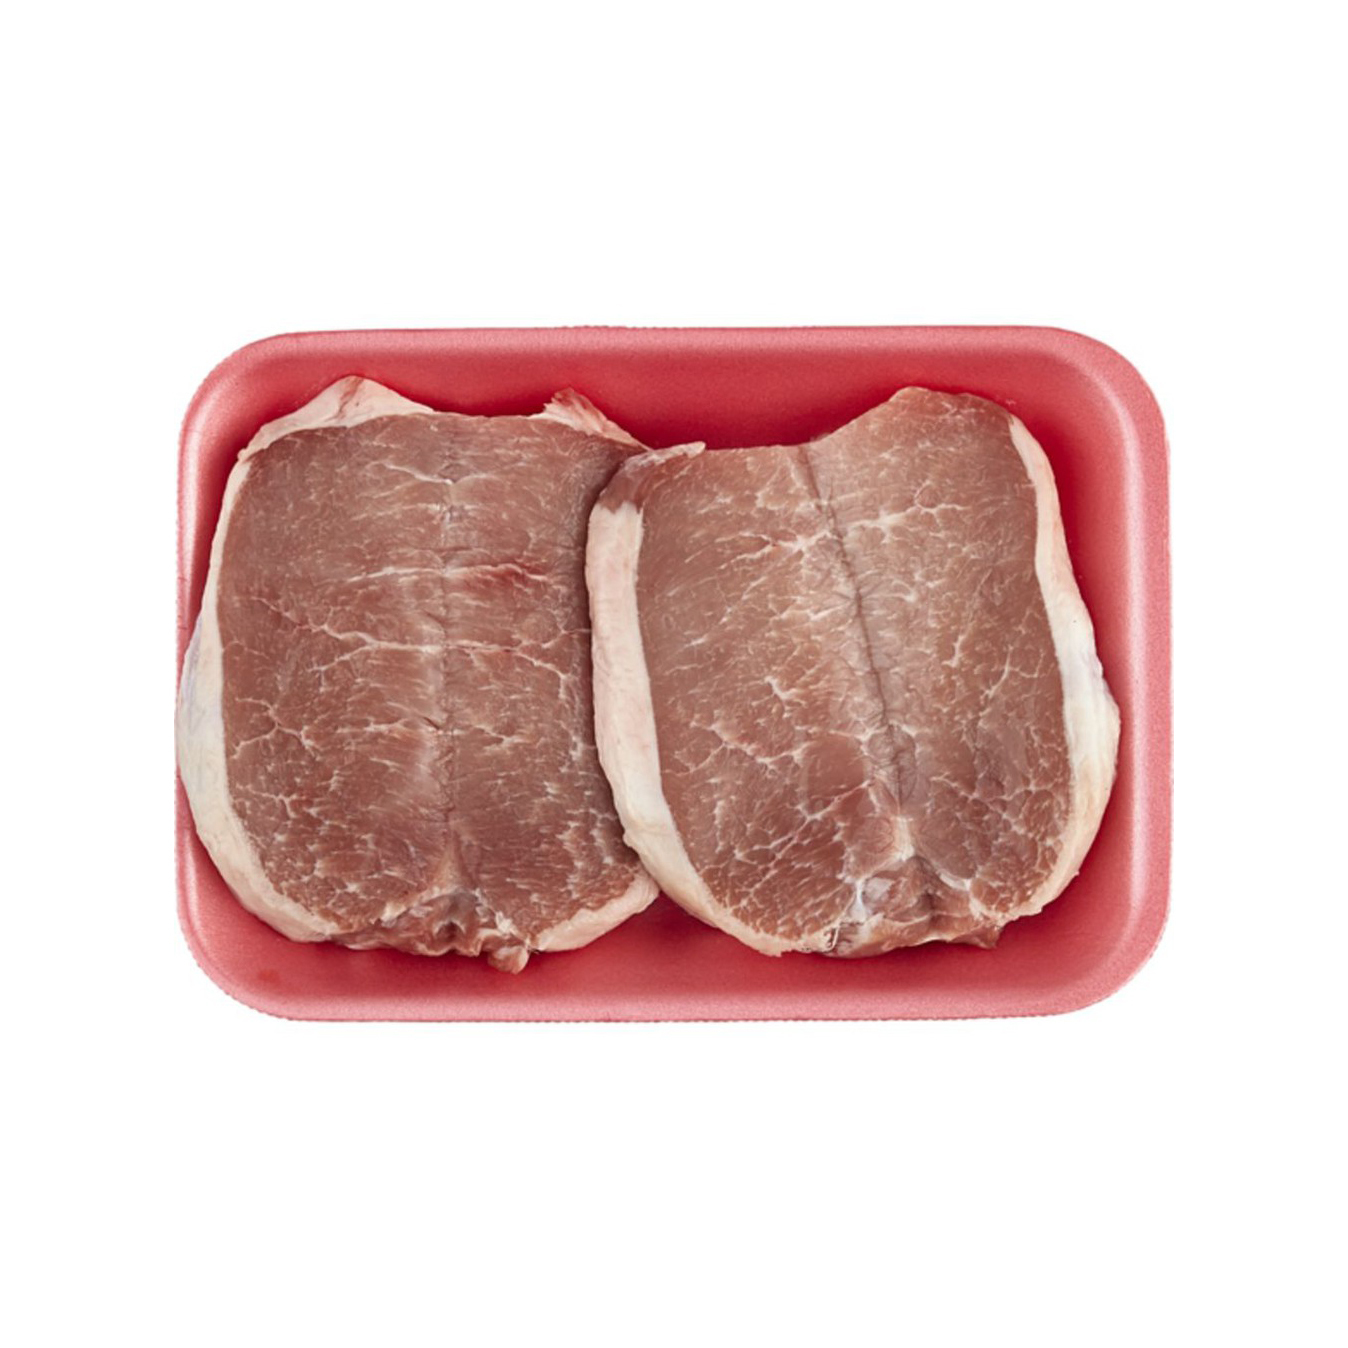 Frozen Processing Fresh Pork Sirloin Roast Meat Cheap